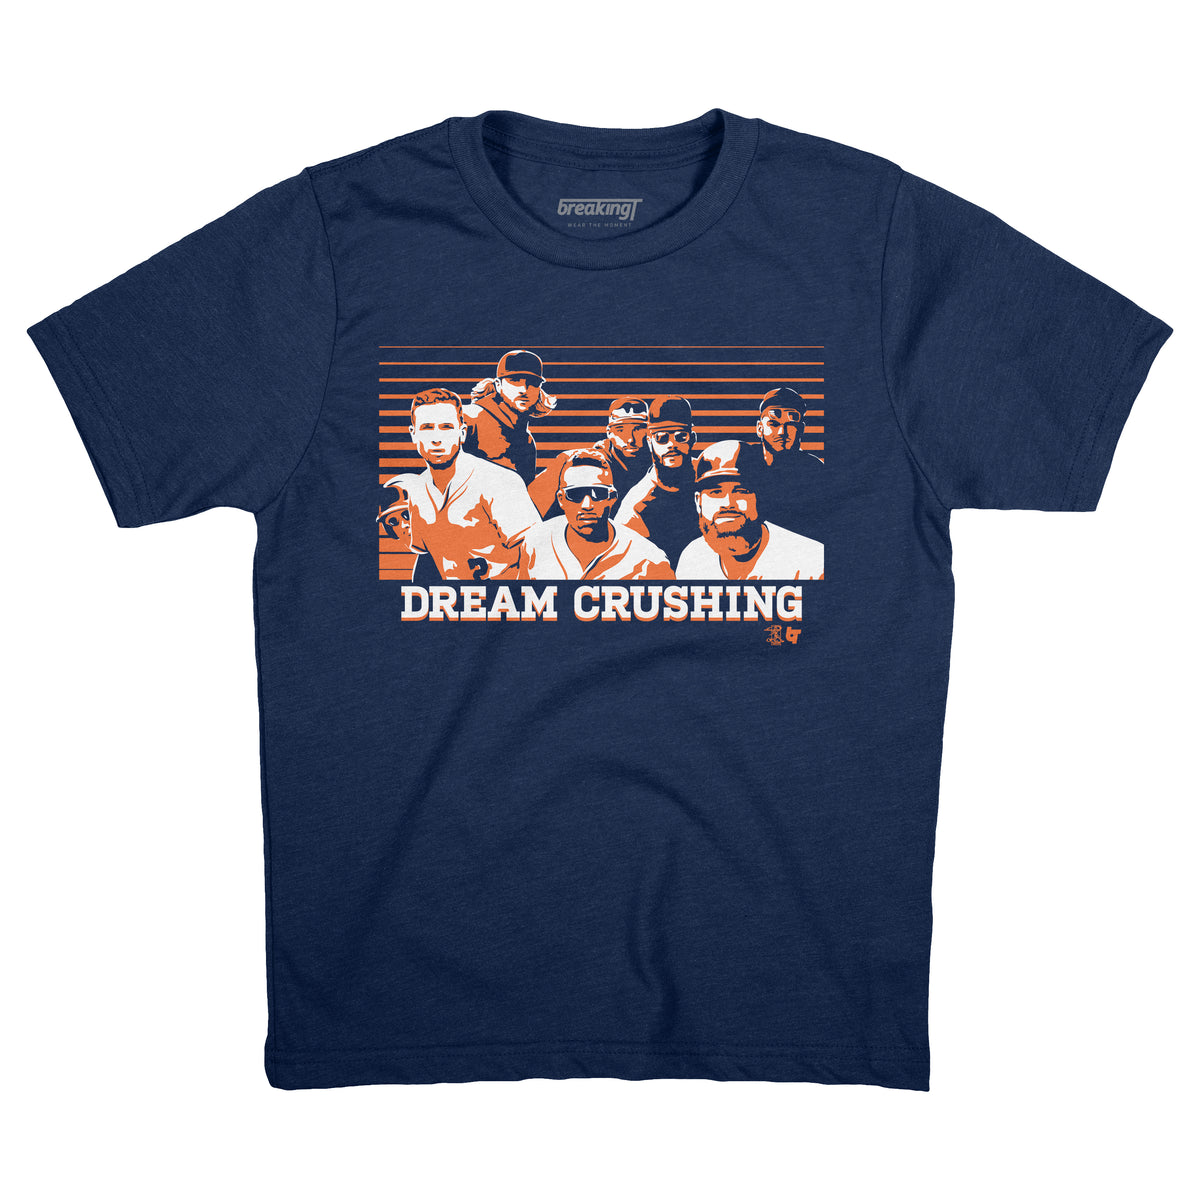 Dream Crushing, Extra Large / Adult T-Shirt - MLB - Navy Blue - Sports Fan Gear | breakingt